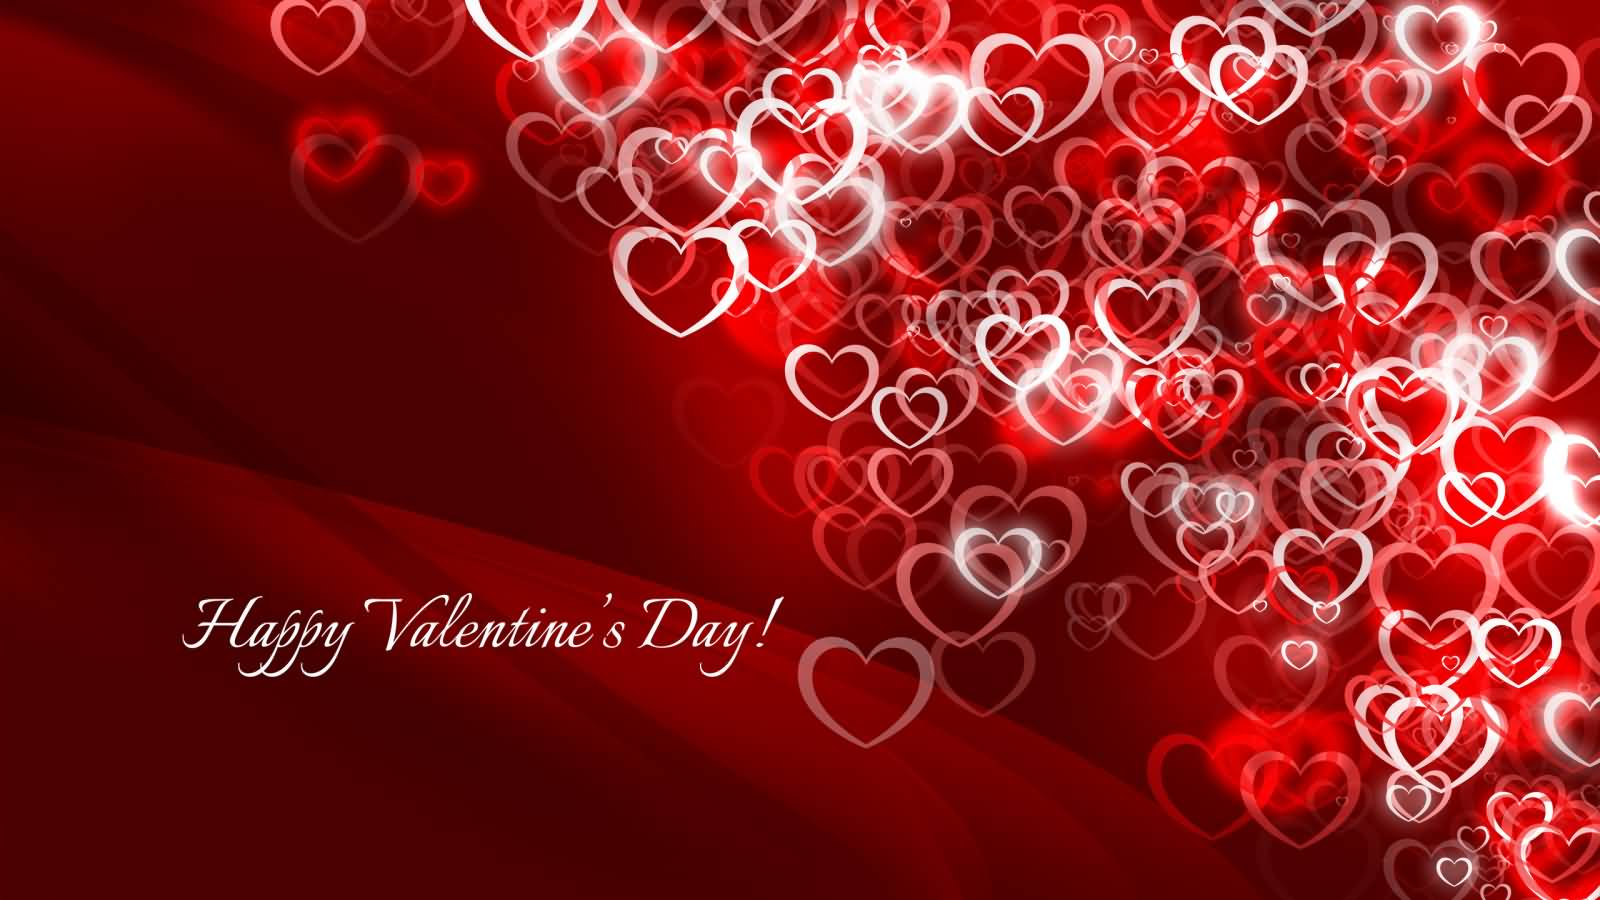 Happy Valentine's Day Hearts HD Wallpaper For Desktop